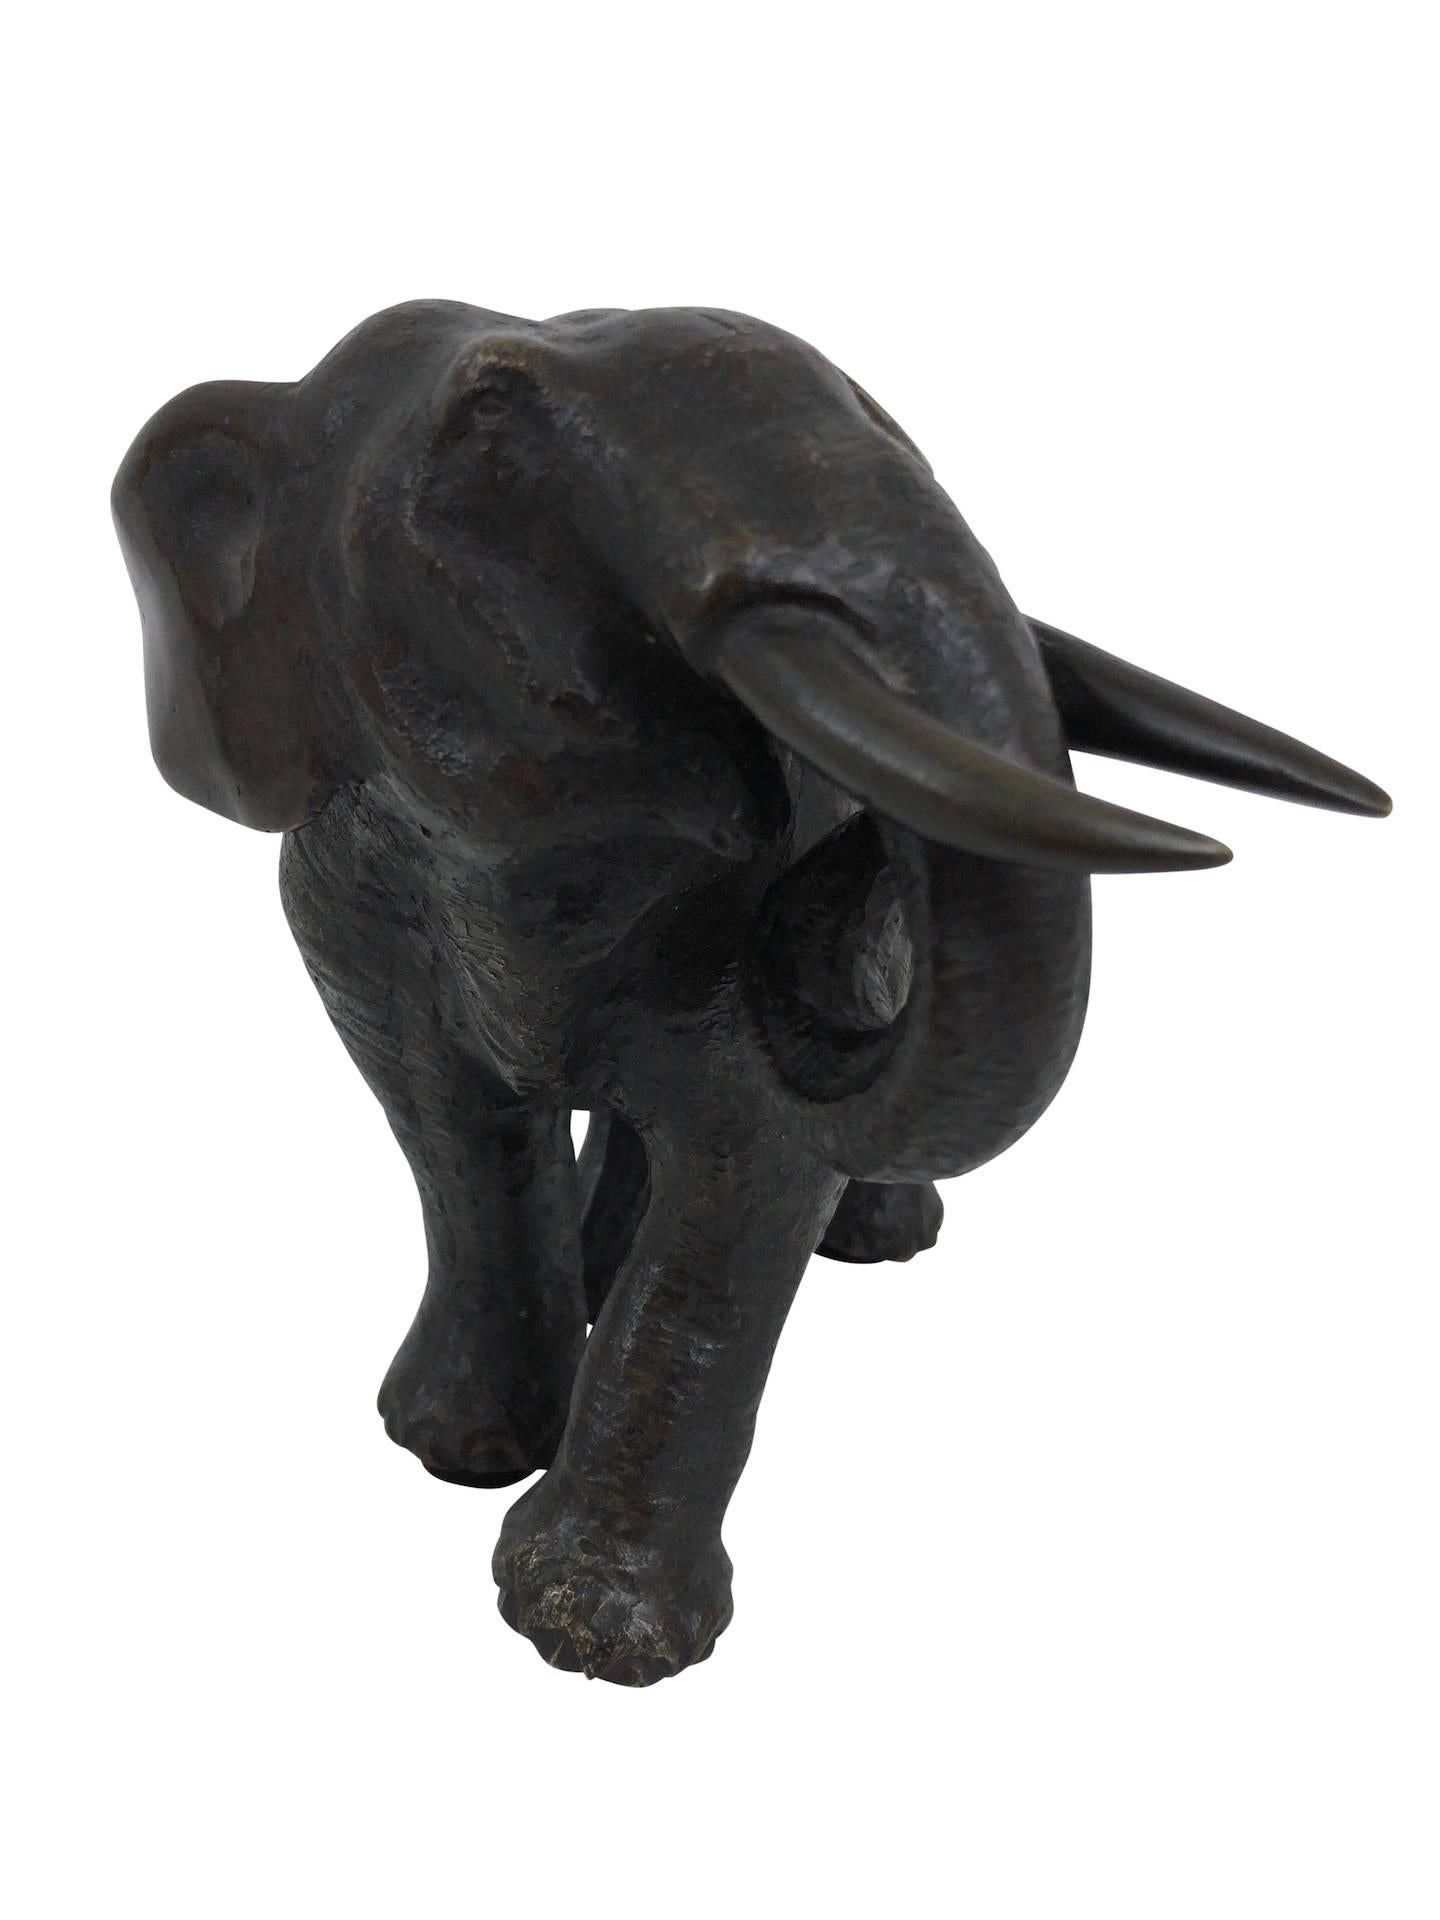 Bronze sculpture, elephant, Asia, circa 1900
Bronze with original patina

Dimensions:
Width 20 cm
Height 15.5 cm
Depth 13 cm.